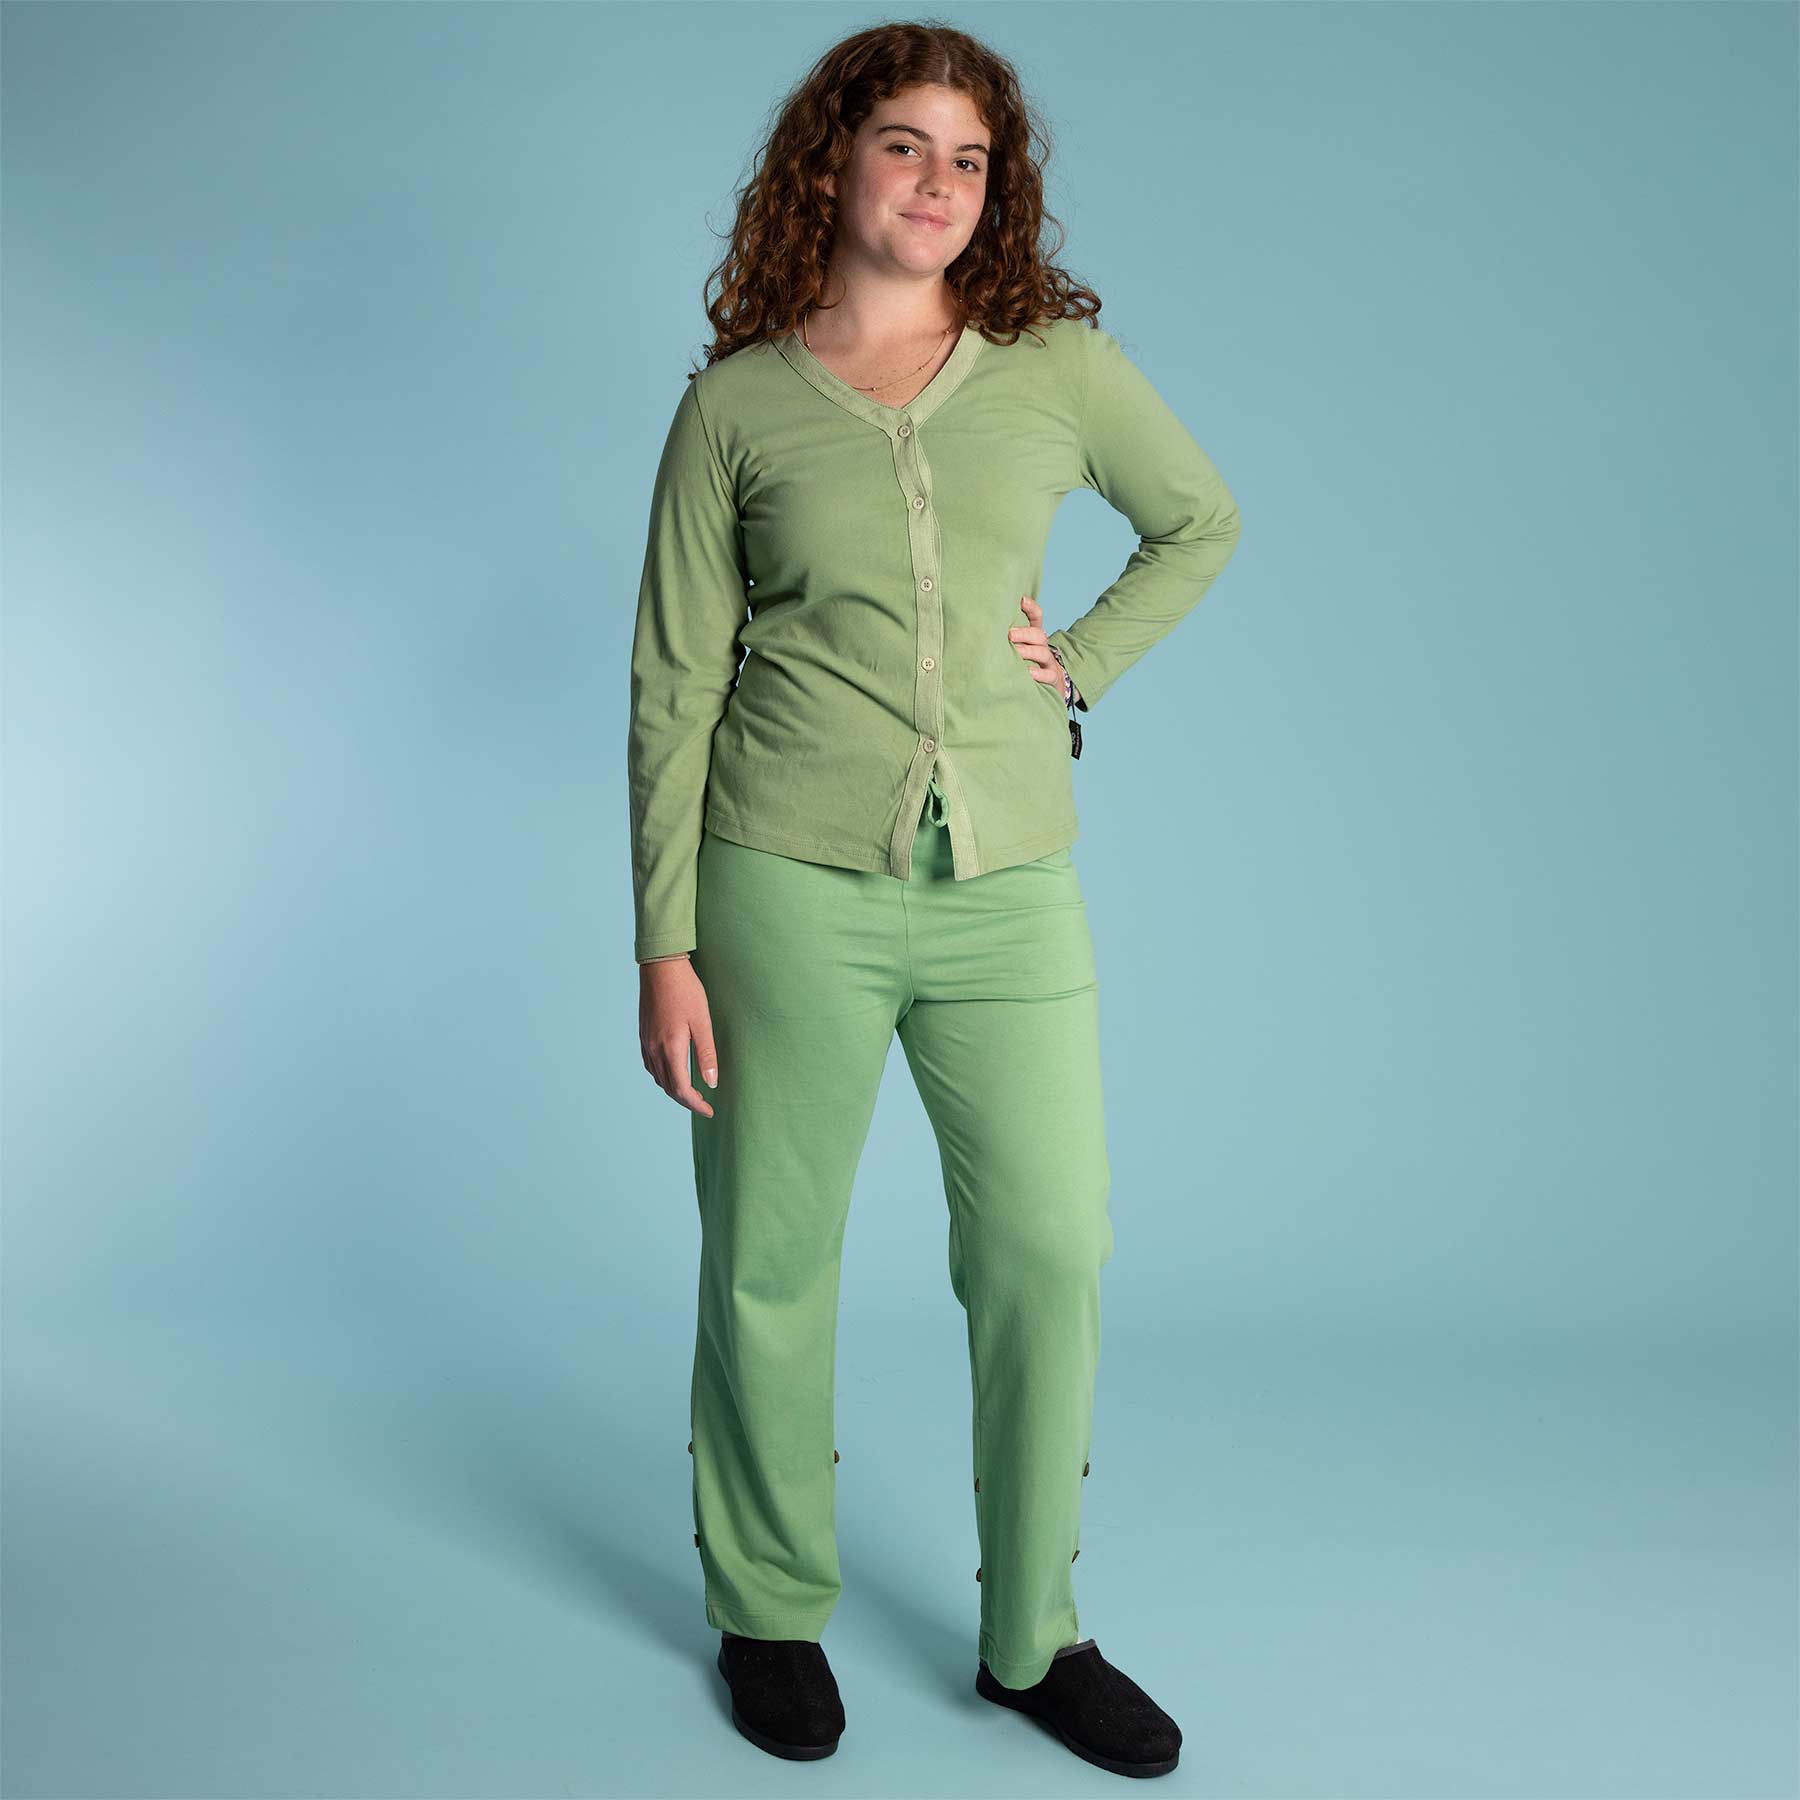 Organic Women's Snug-Fit Print Pajamas Set